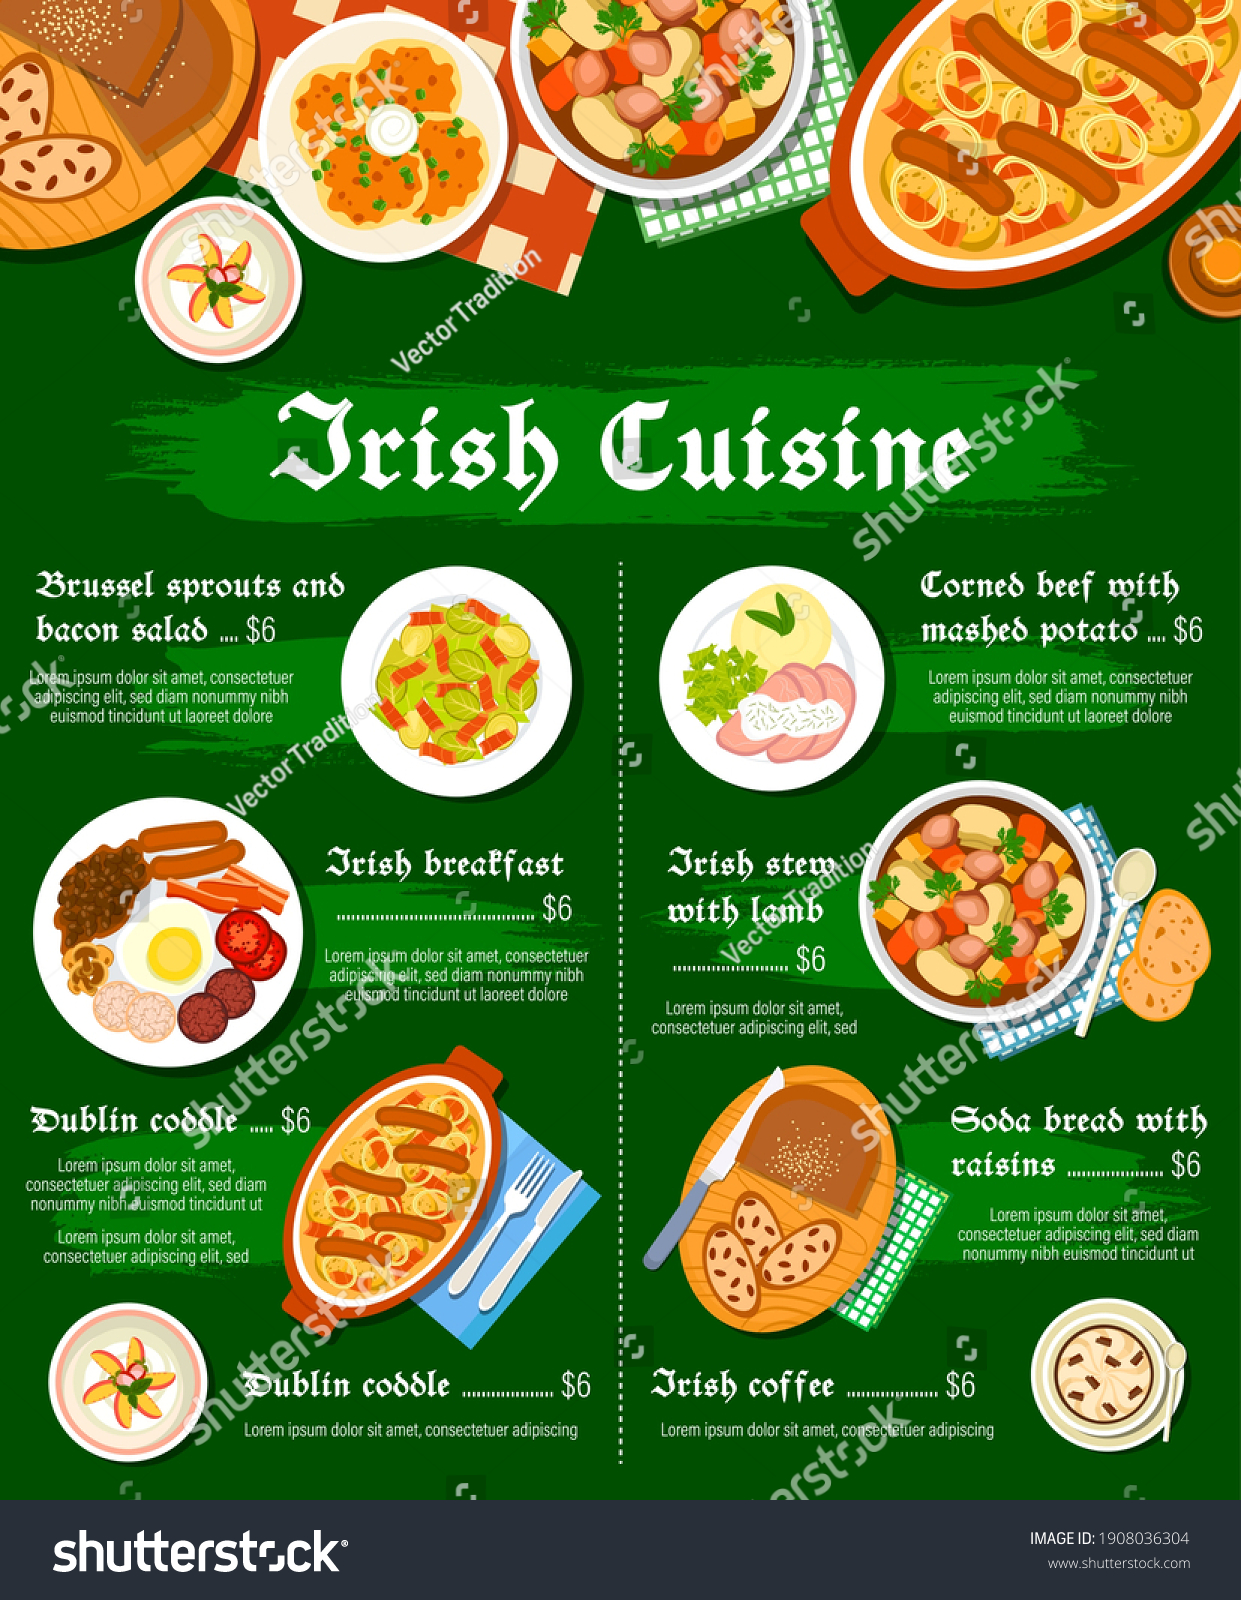 SVG of Irish food cuisine menu, breakfast dishes meals, Ireland restaurant vector traditional lunch. Irish cuisine food menu peach pudding dessert, lamb stew and potato pancakes borty with soda bread svg